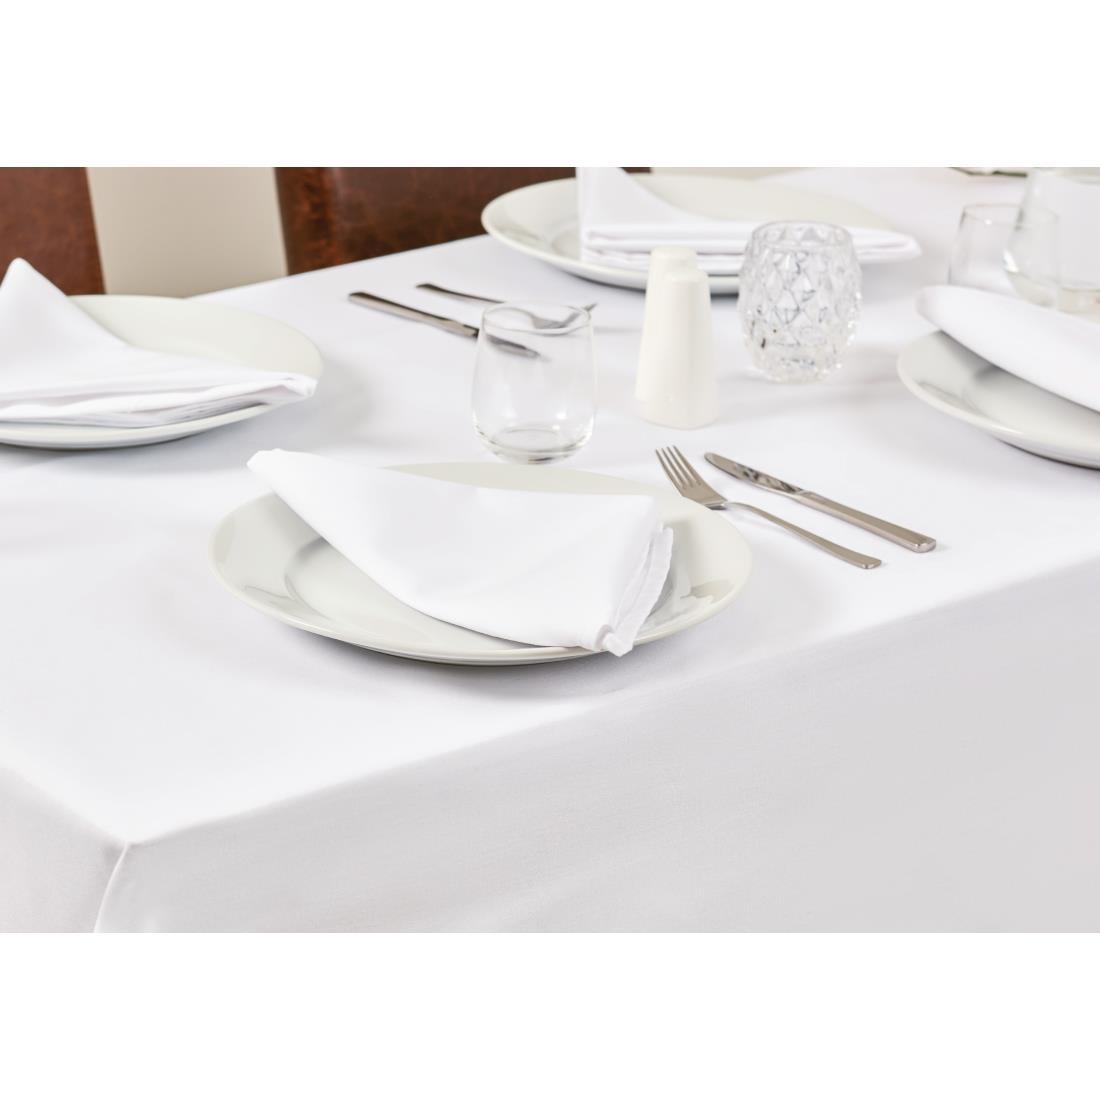 Mitre Essentials Occasions Tablecloth White 1350 x 1350mm - GW430  - 2